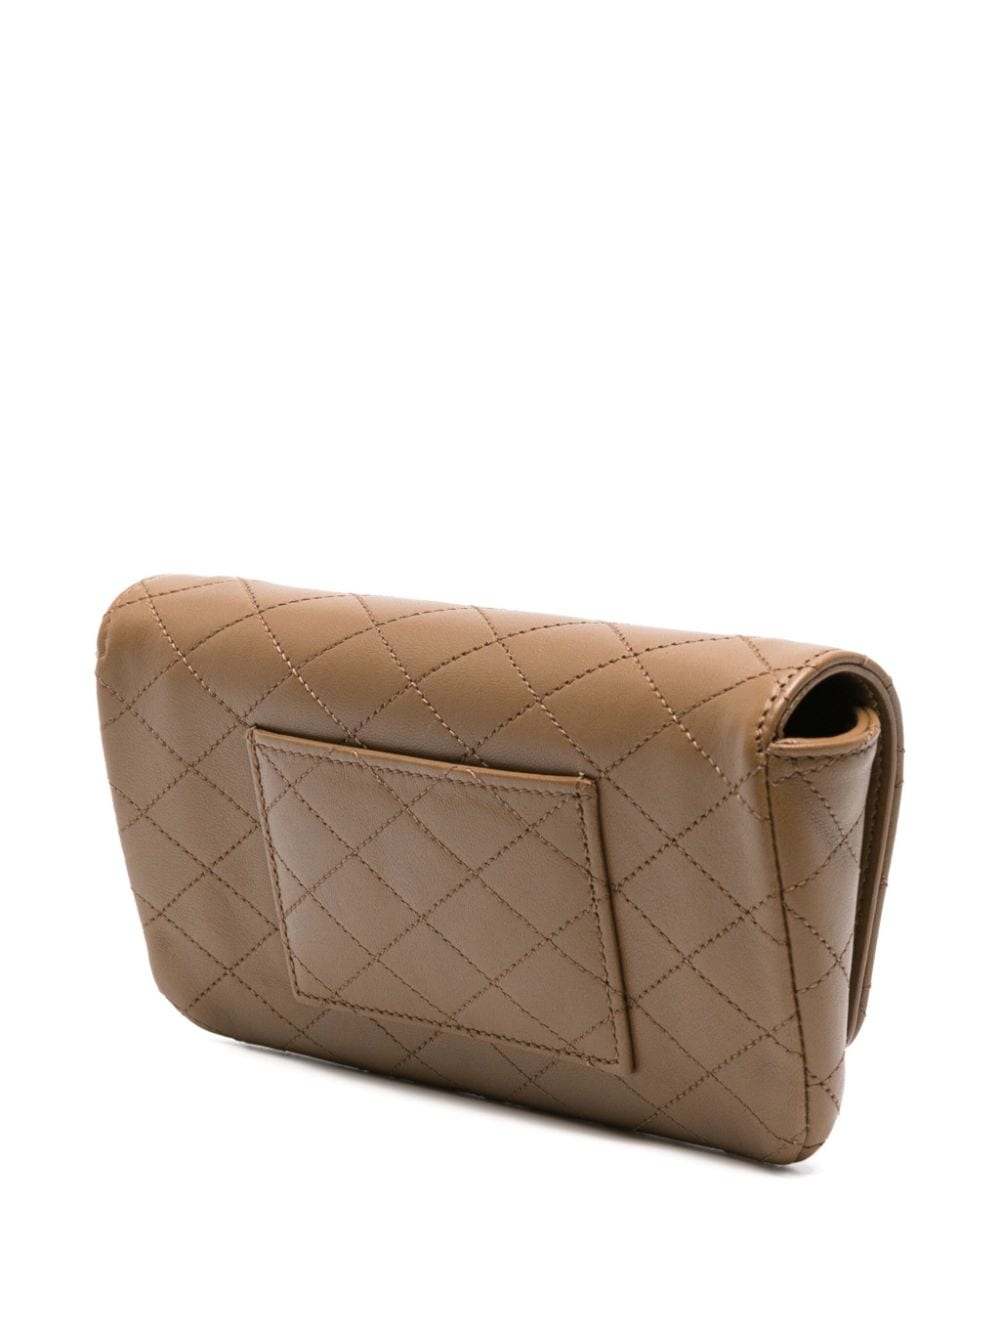 Saint Laurent Gaby leather crossbody bag - Beige